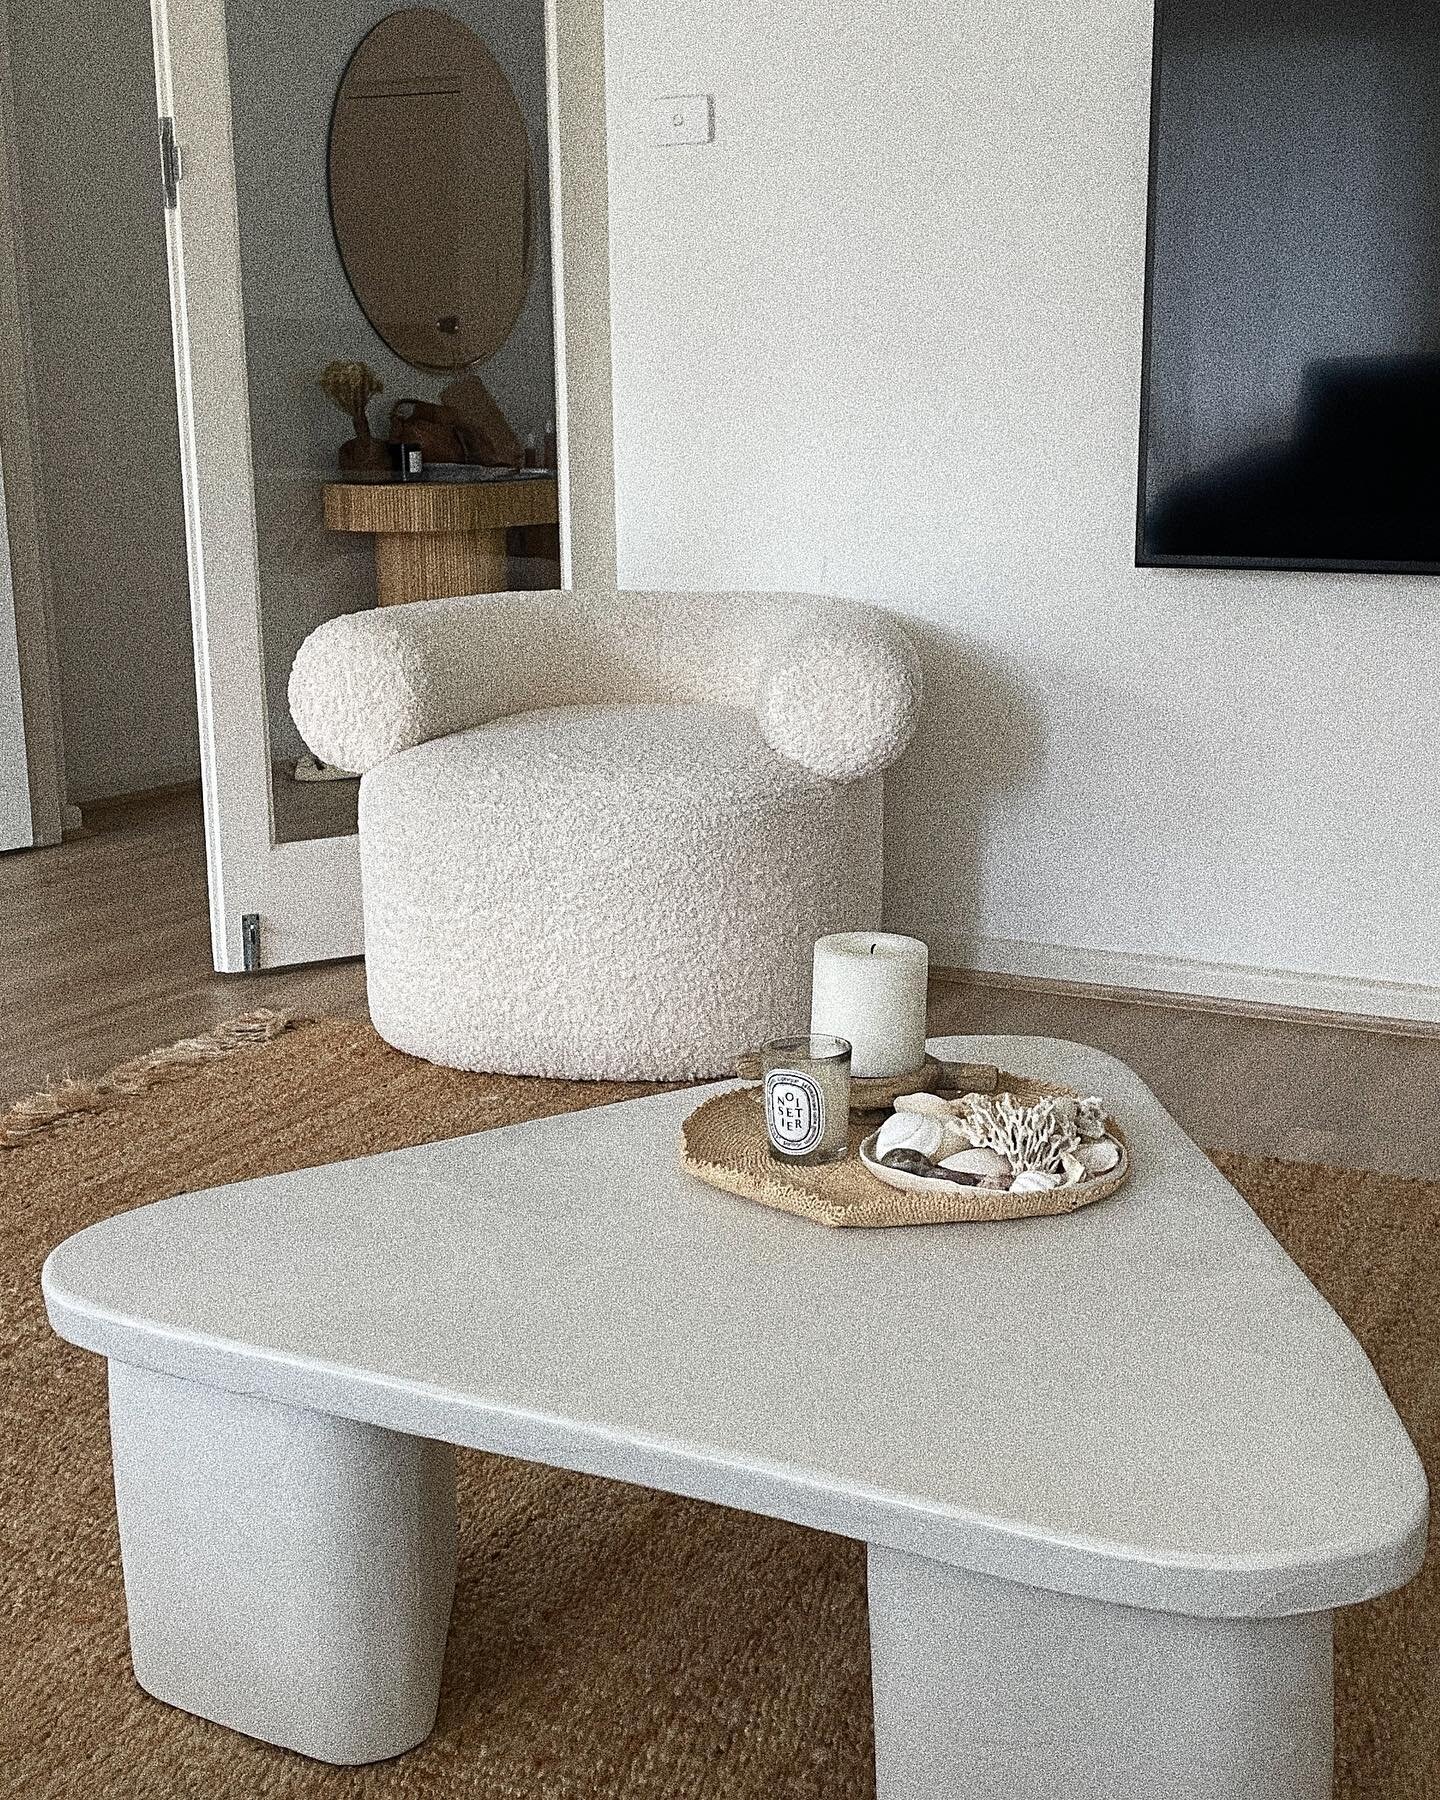 Home 🤍 #interiors #interiordesign #interiorstyling #furniture #furnituredesign #minimal #simple #elegant #plasterfurniture #plaster #whiteonwhite #sydney #australia